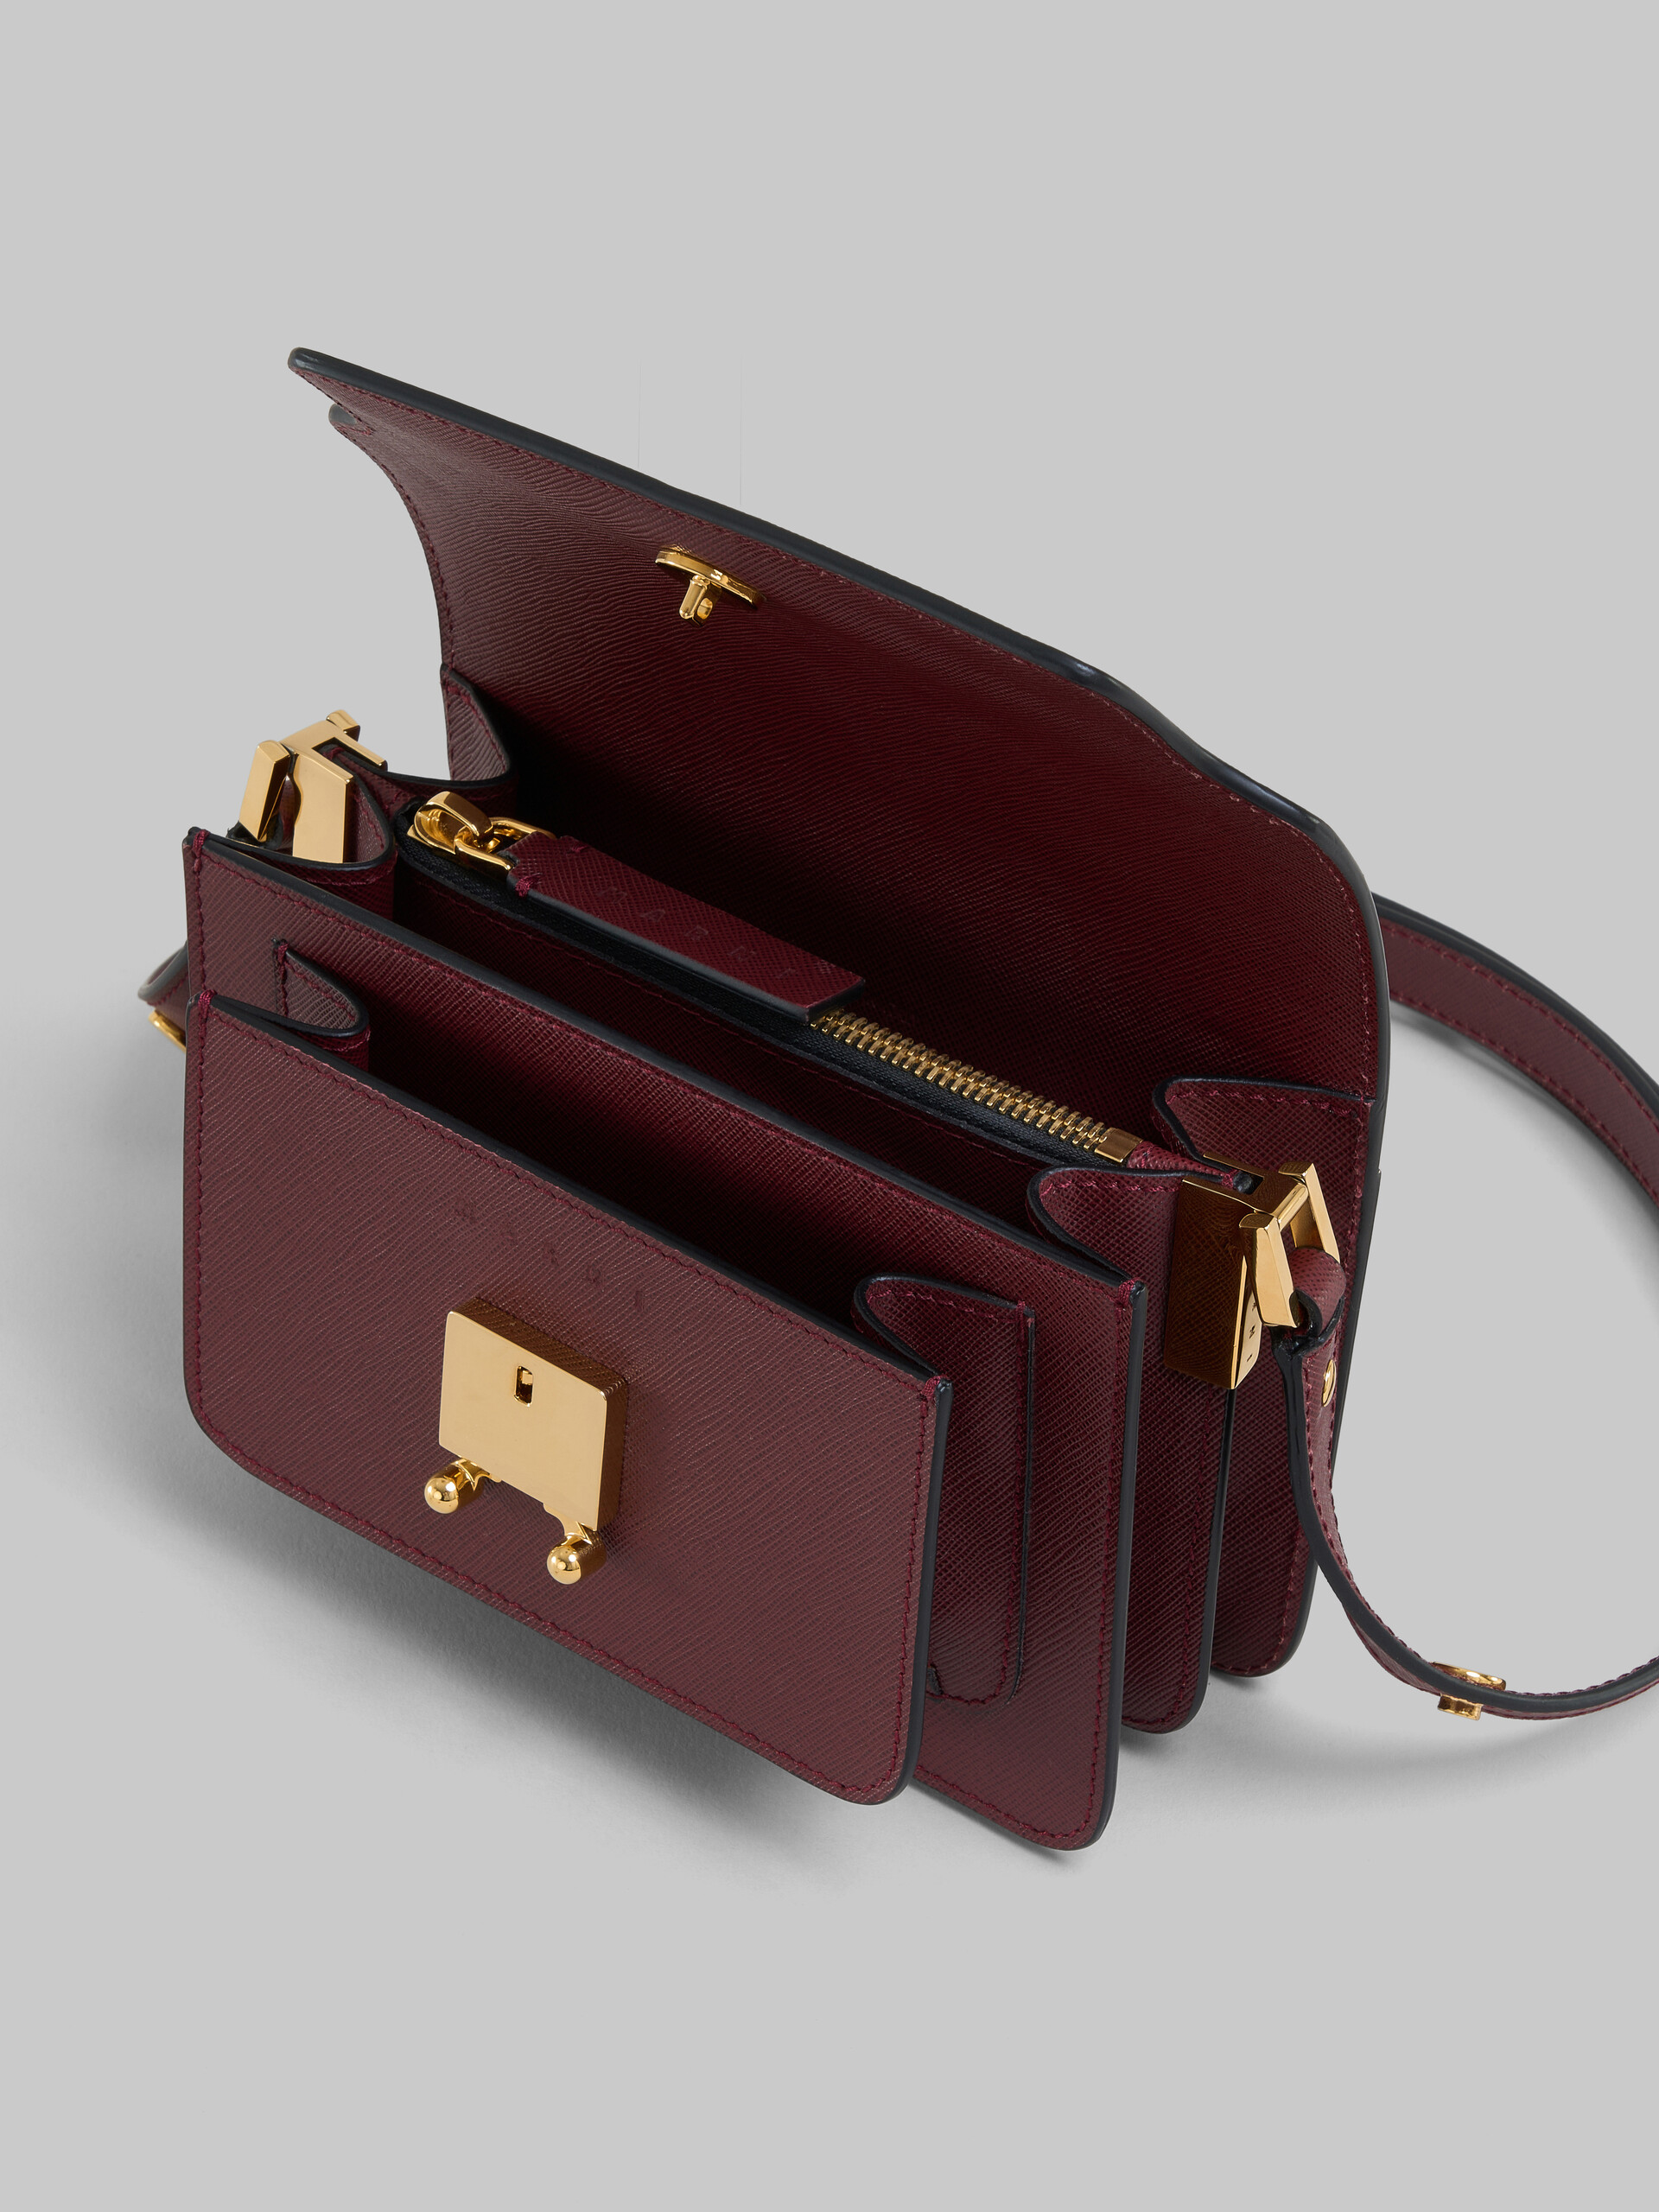 Mini sac Trunk en cuir Saffiano marron - Sacs portés épaule - Image 4